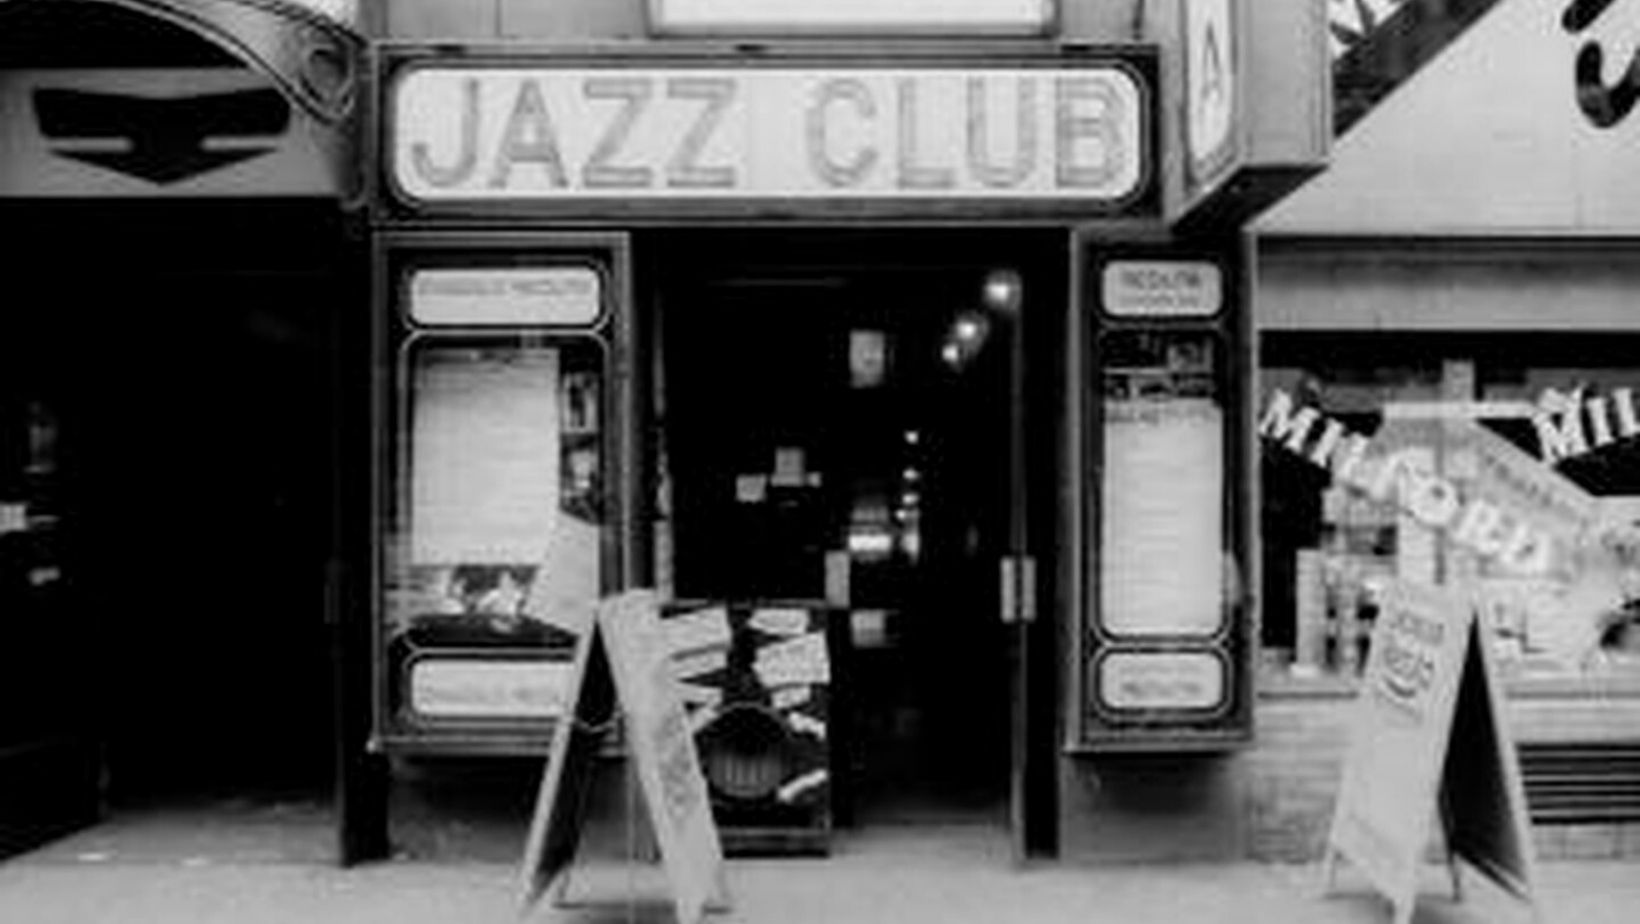 History of Prague’s First Jazz Club